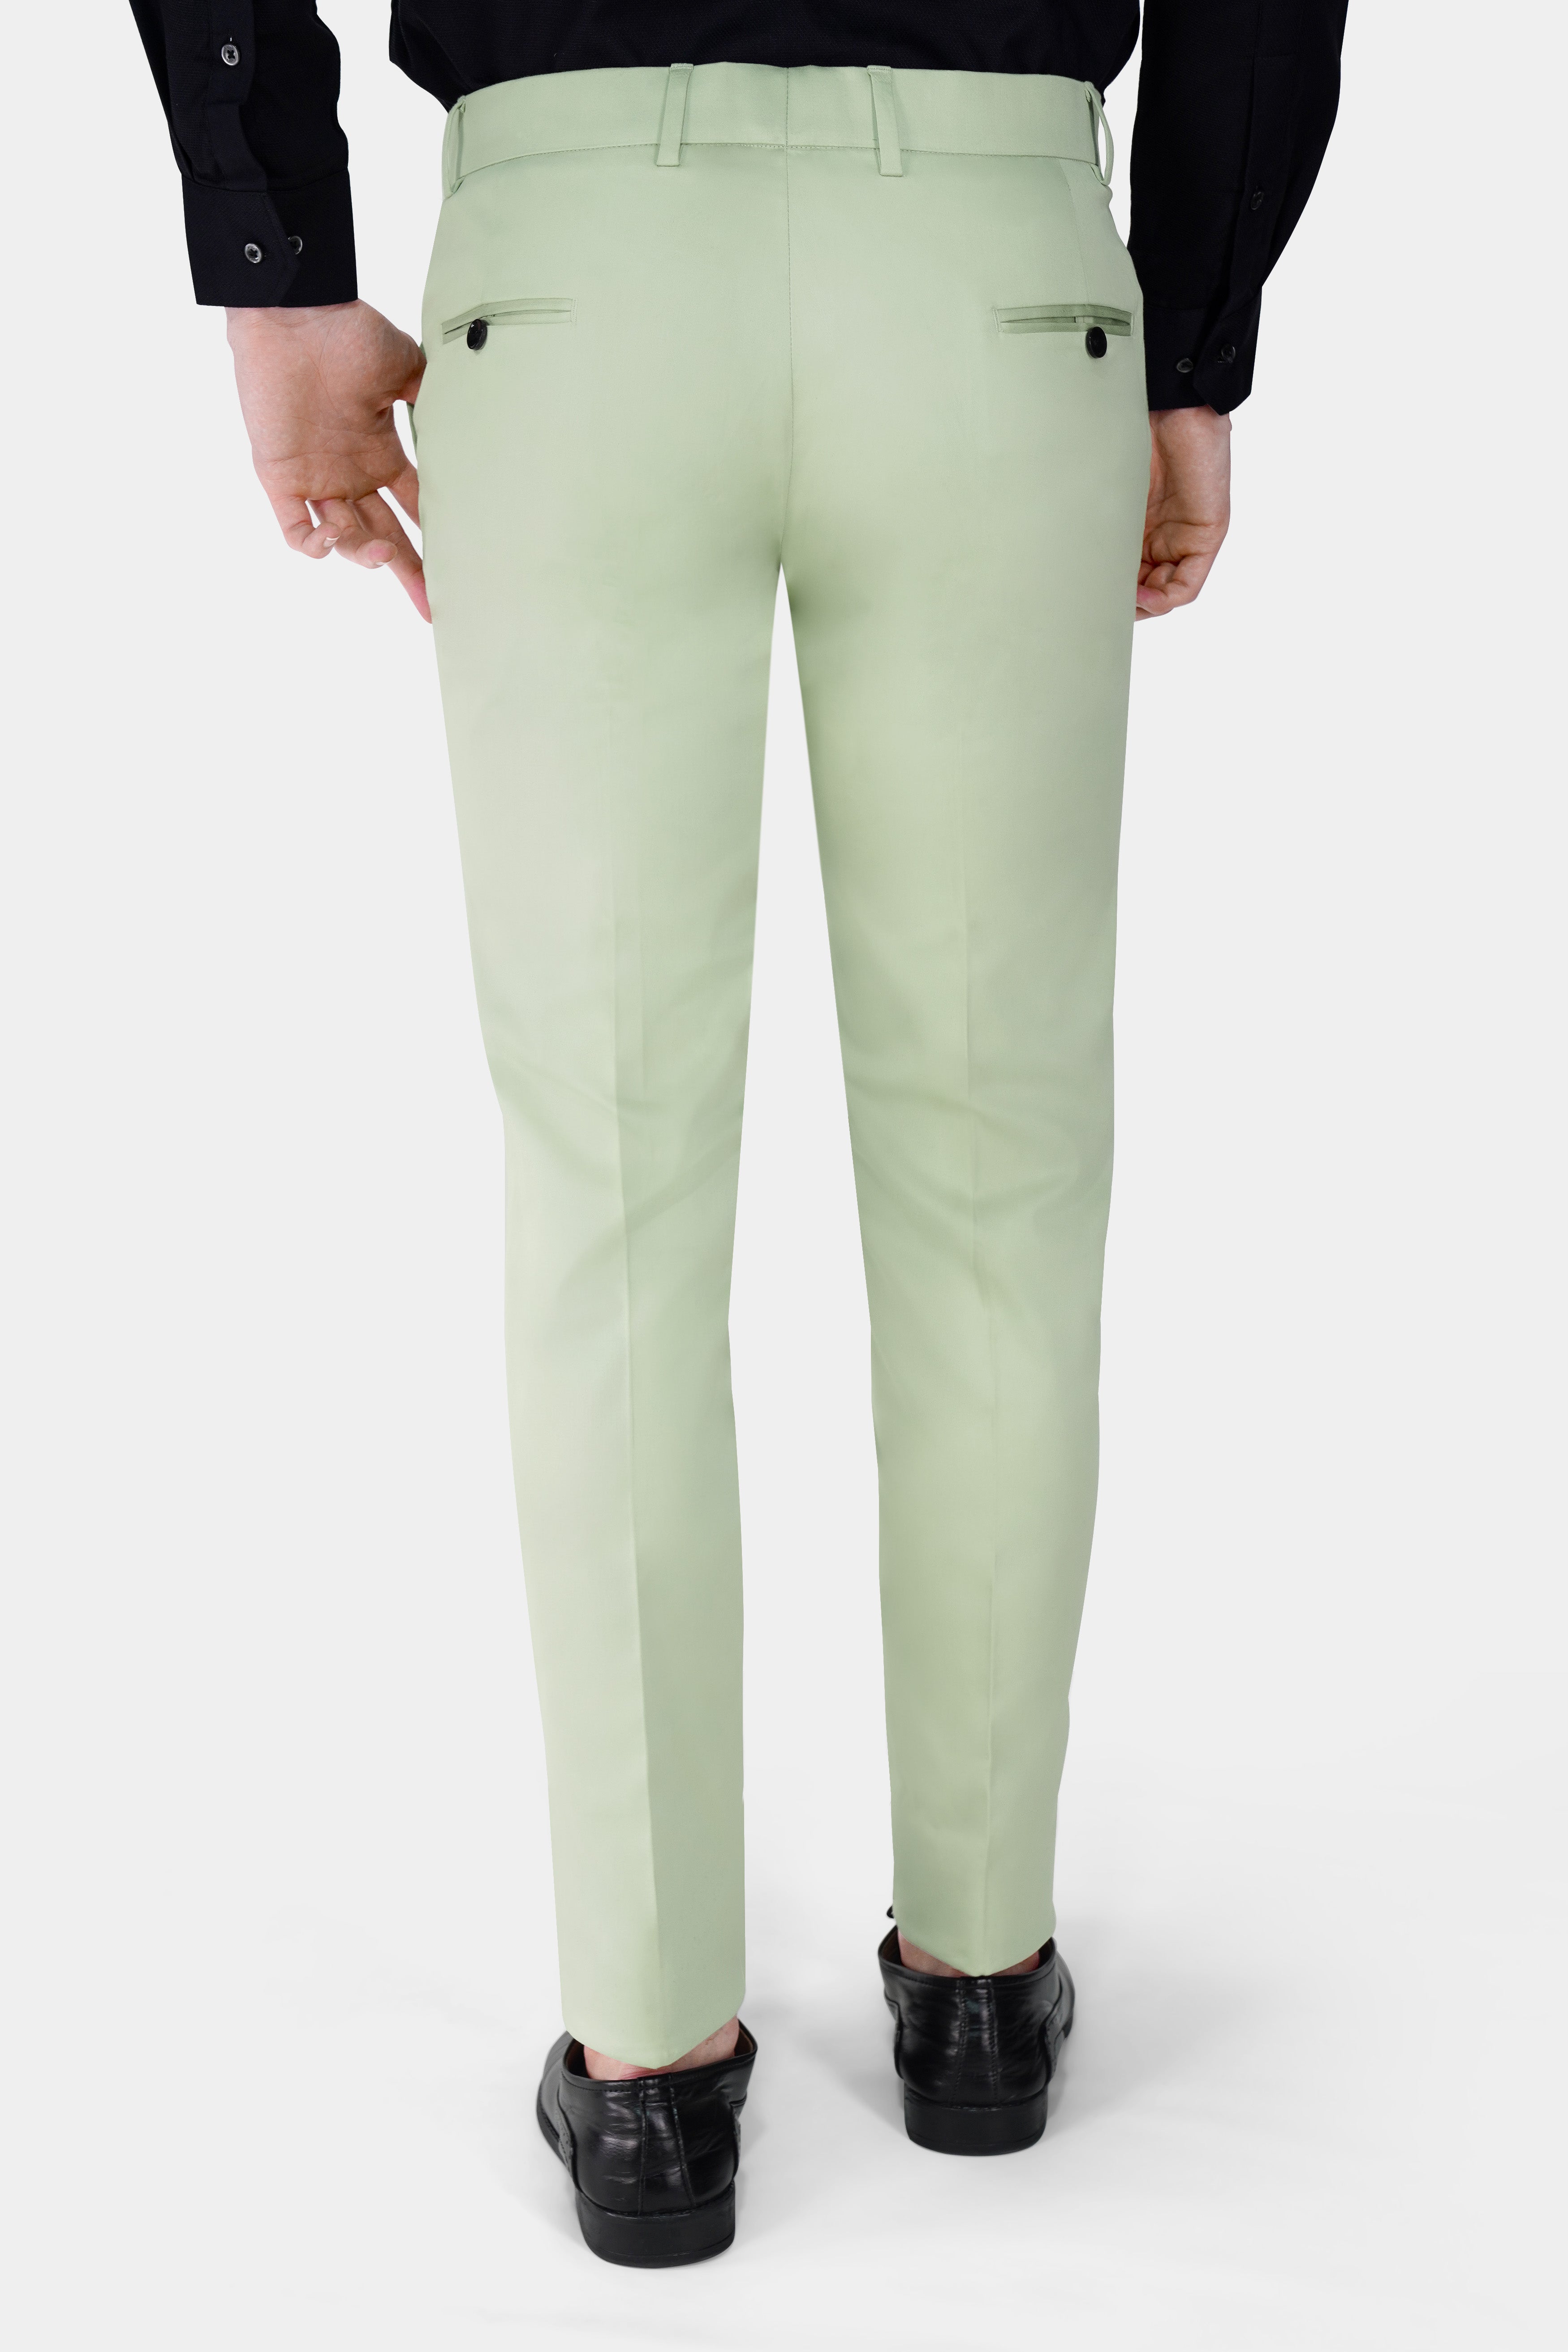 Coriander Green Premium Cotton Stretchable Traveler Pant T2793-28, T2793-30, T2793-32, T2793-34, T2793-36, T2793-38, T2793-40, T2793-42, T2793-44